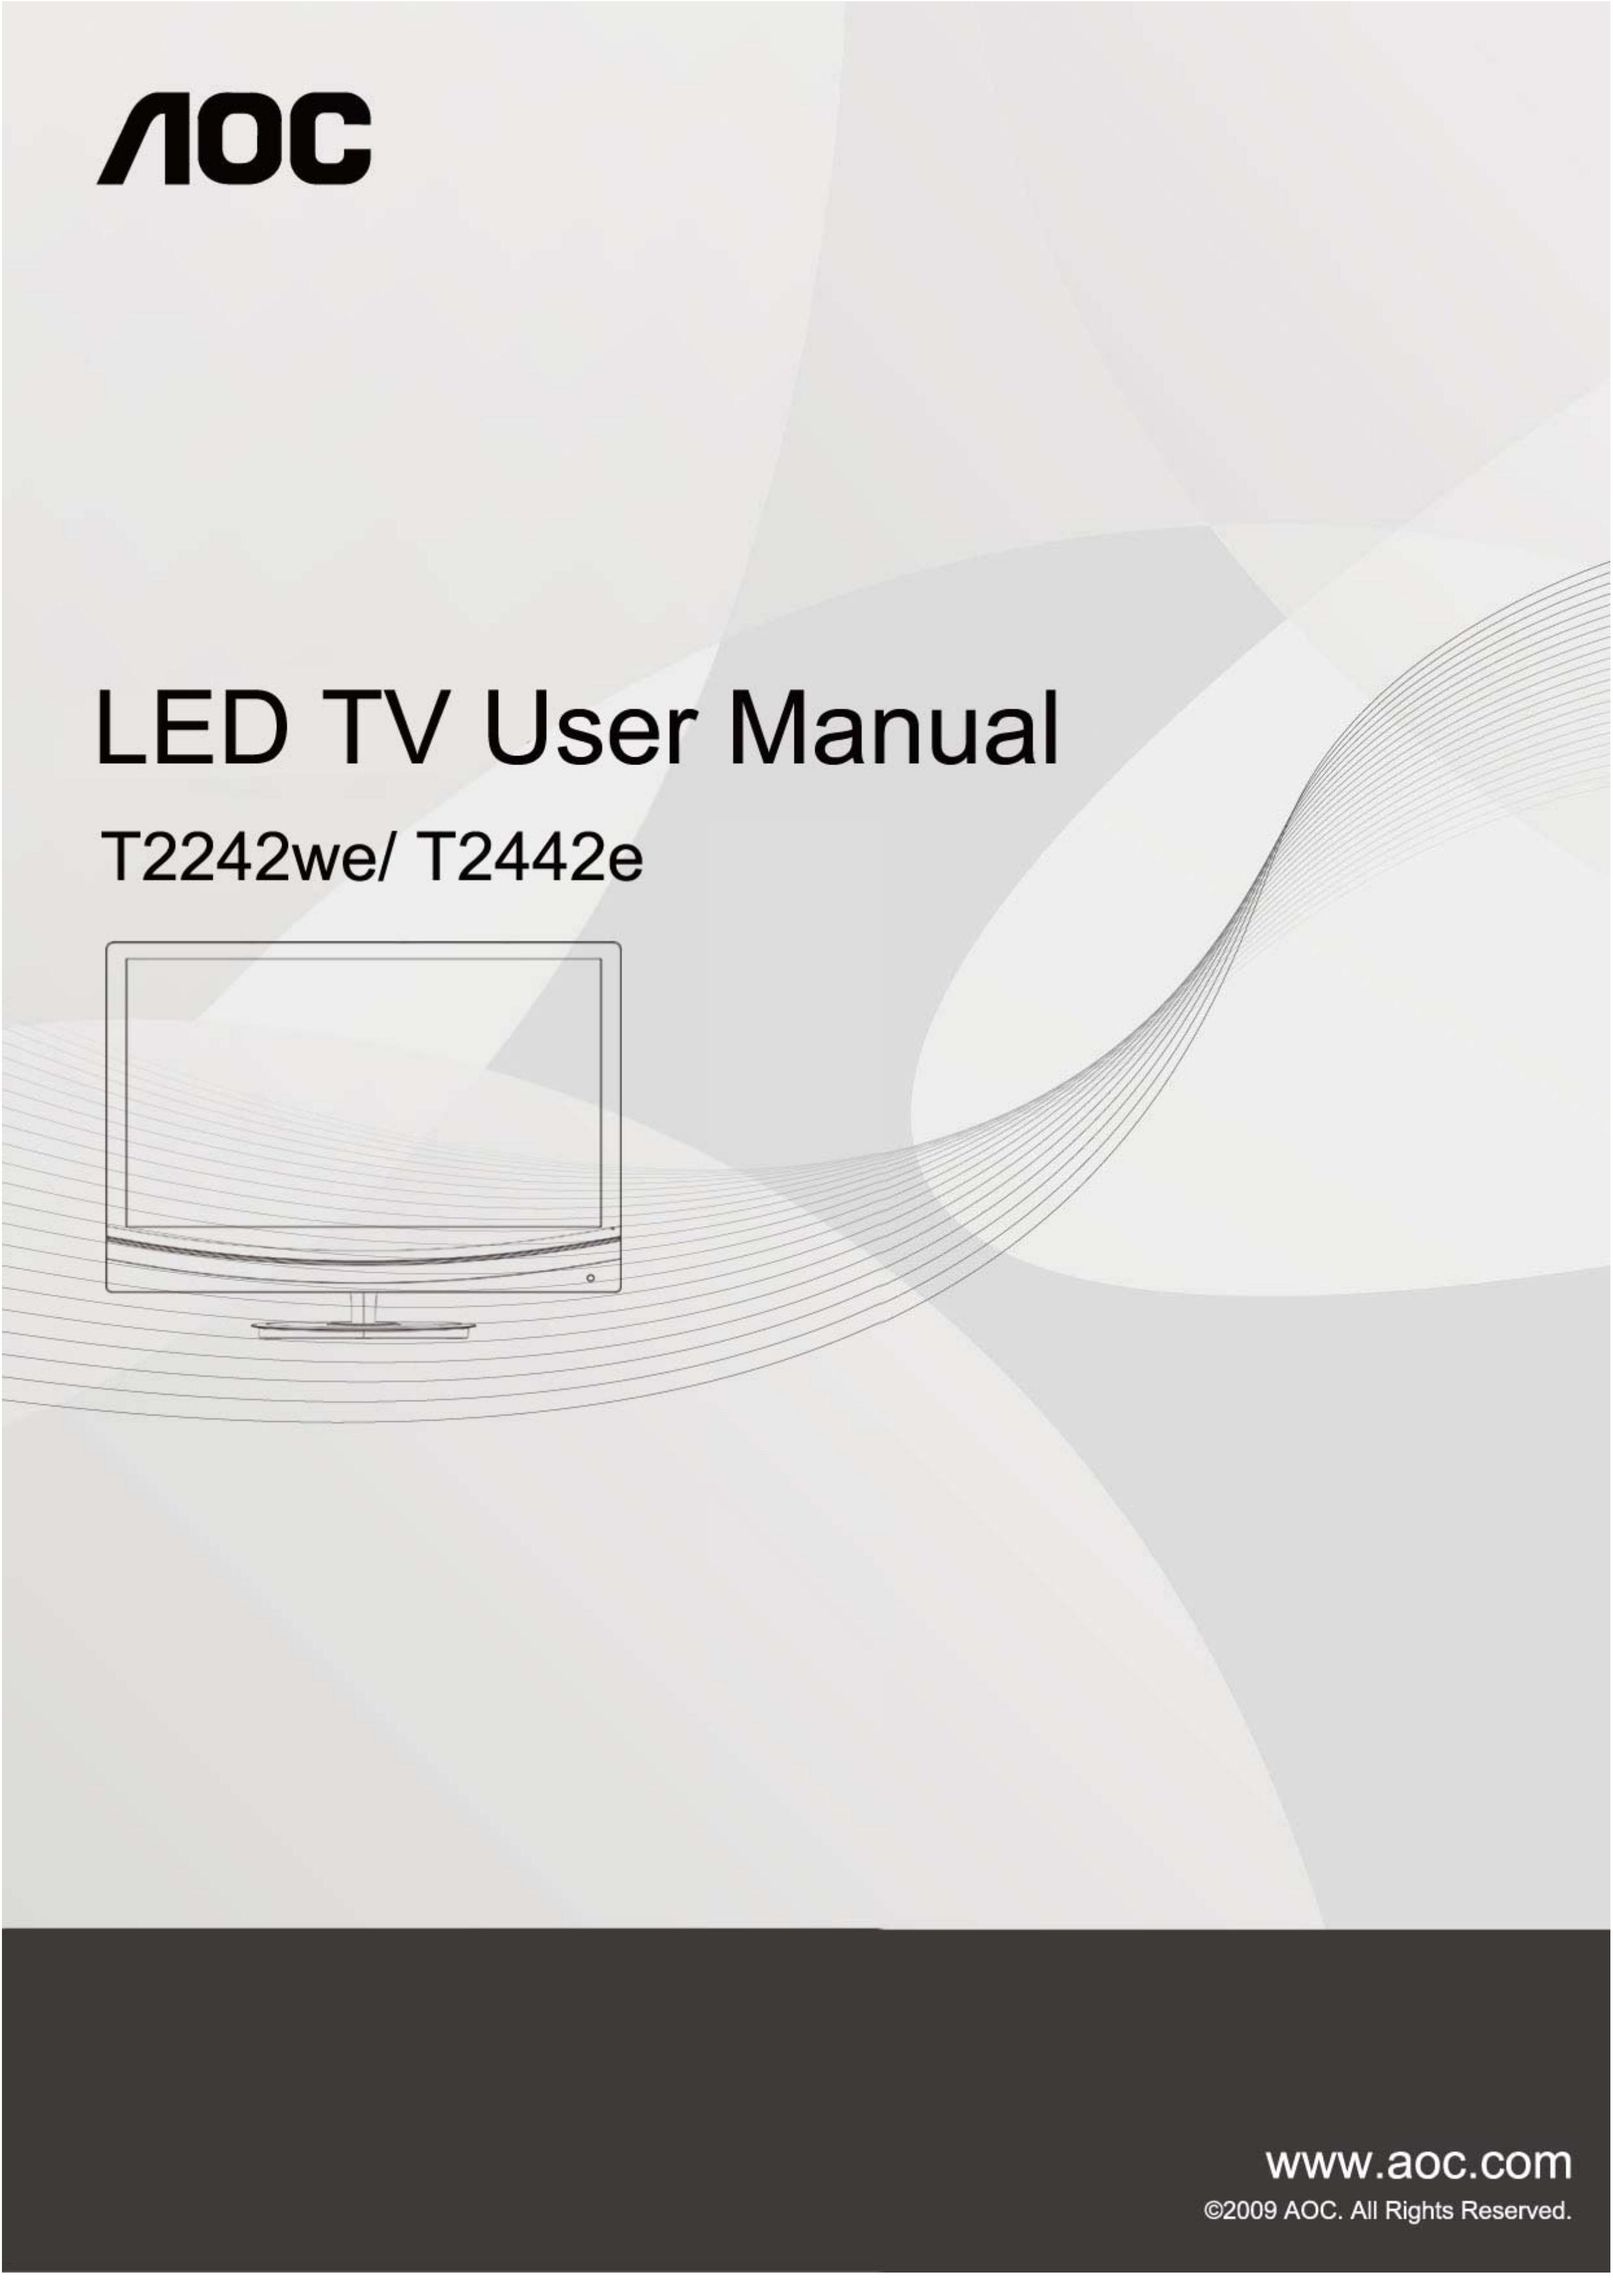 AOC T2242we Car Satellite TV System User Manual